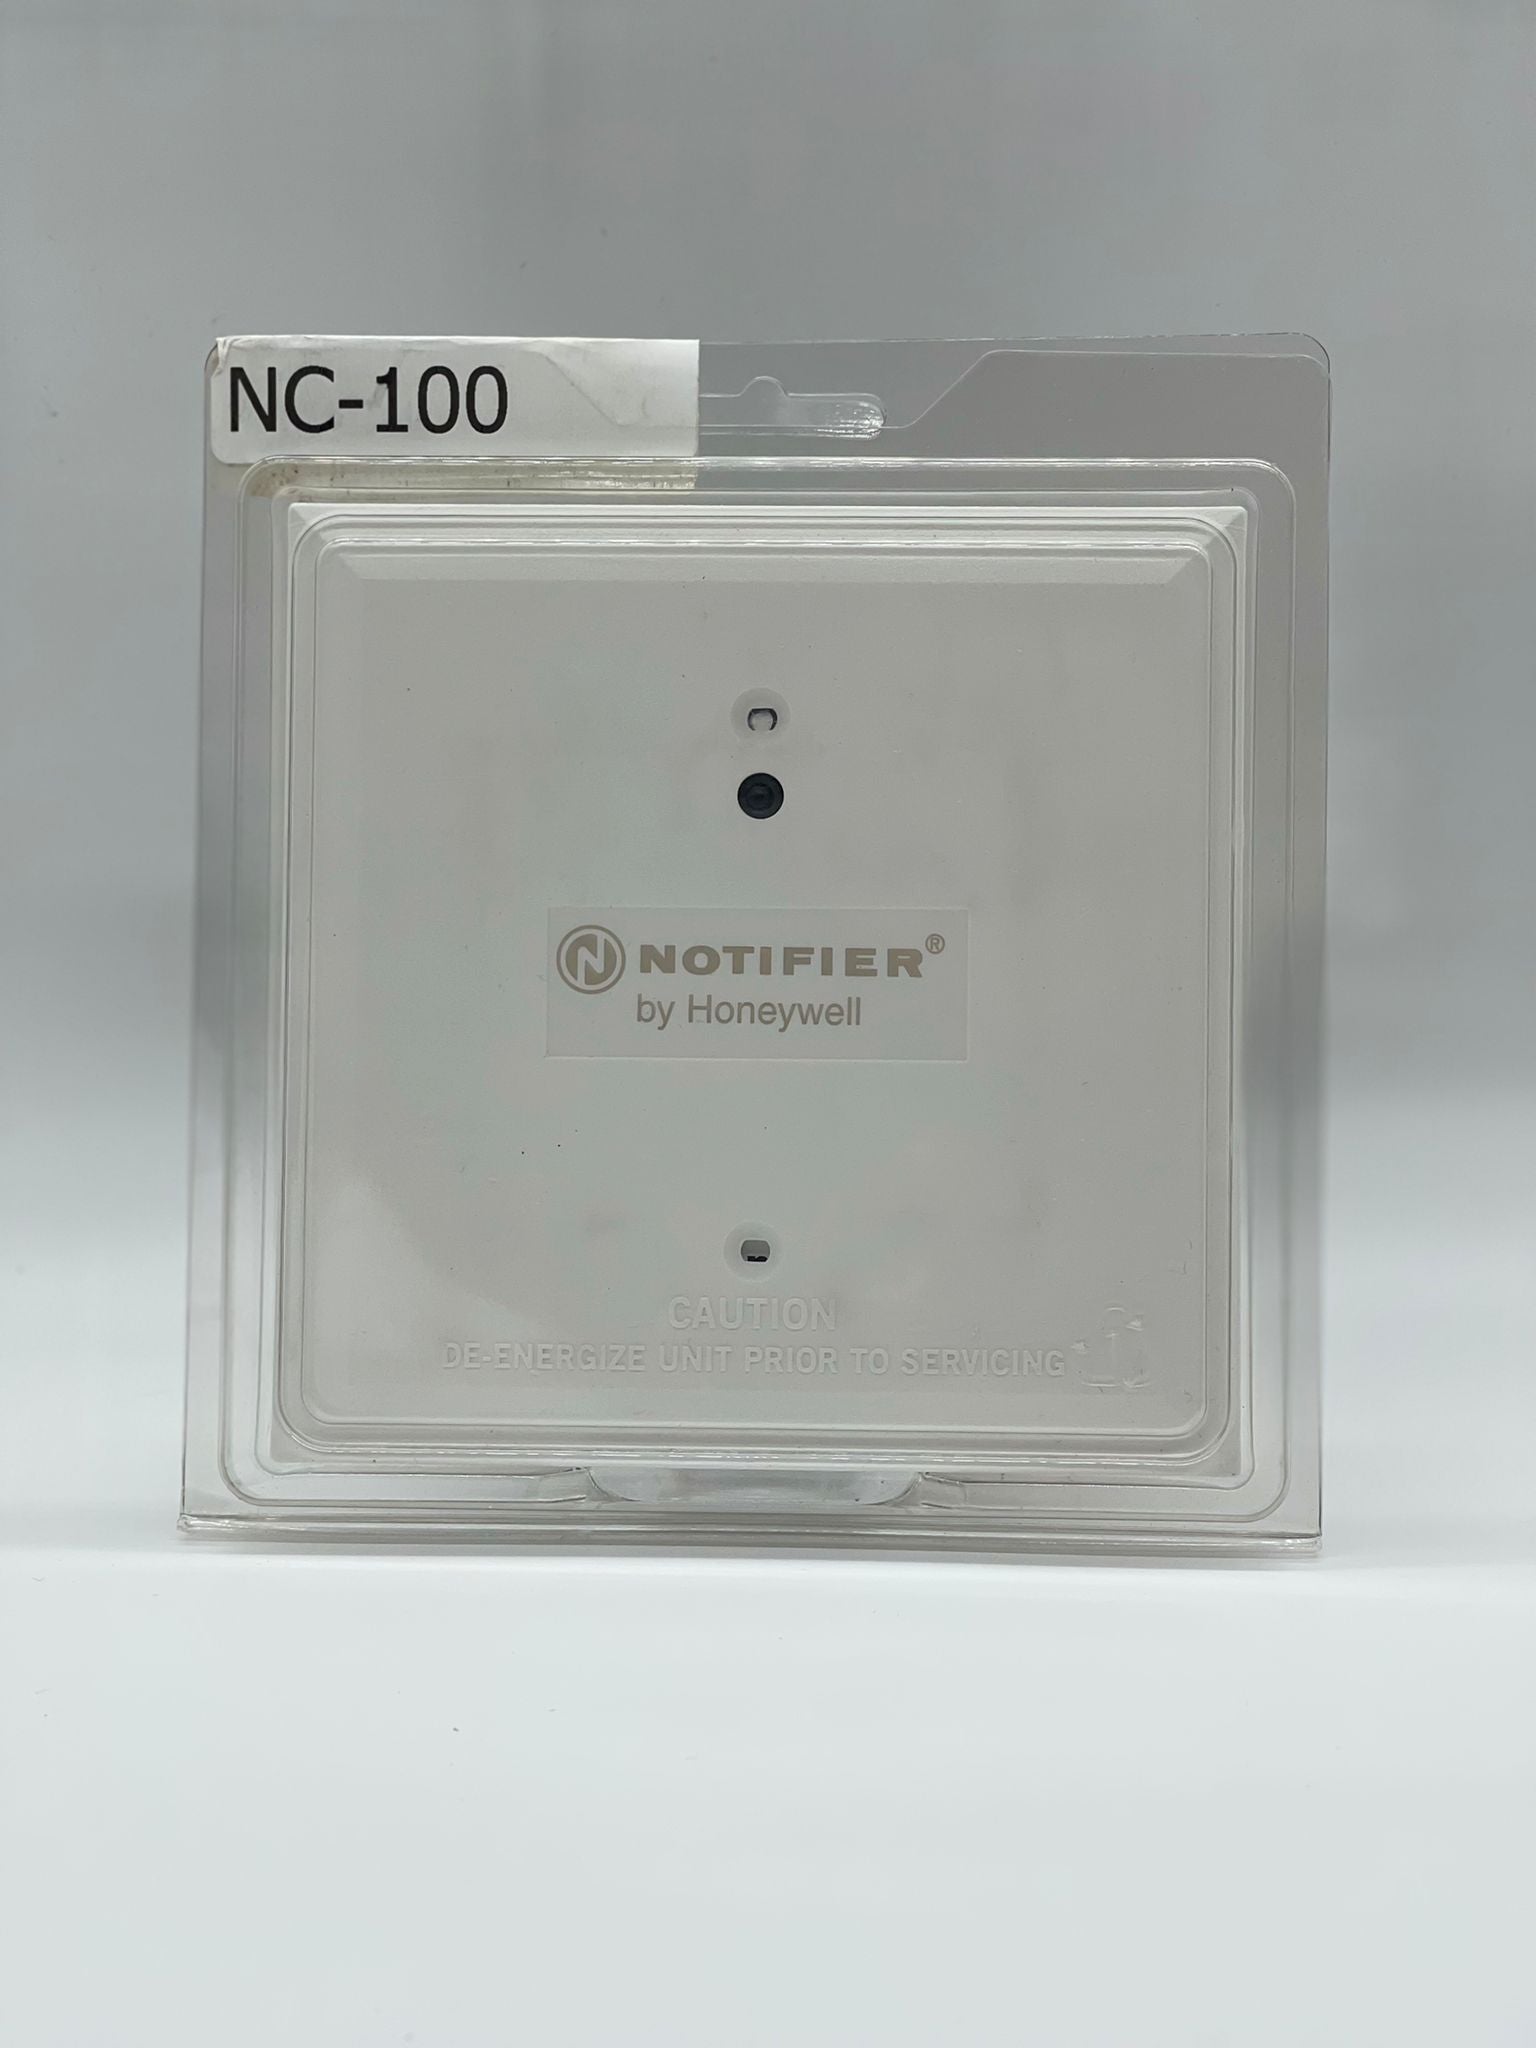 Notifier NC-100 - The Fire Alarm Supplier